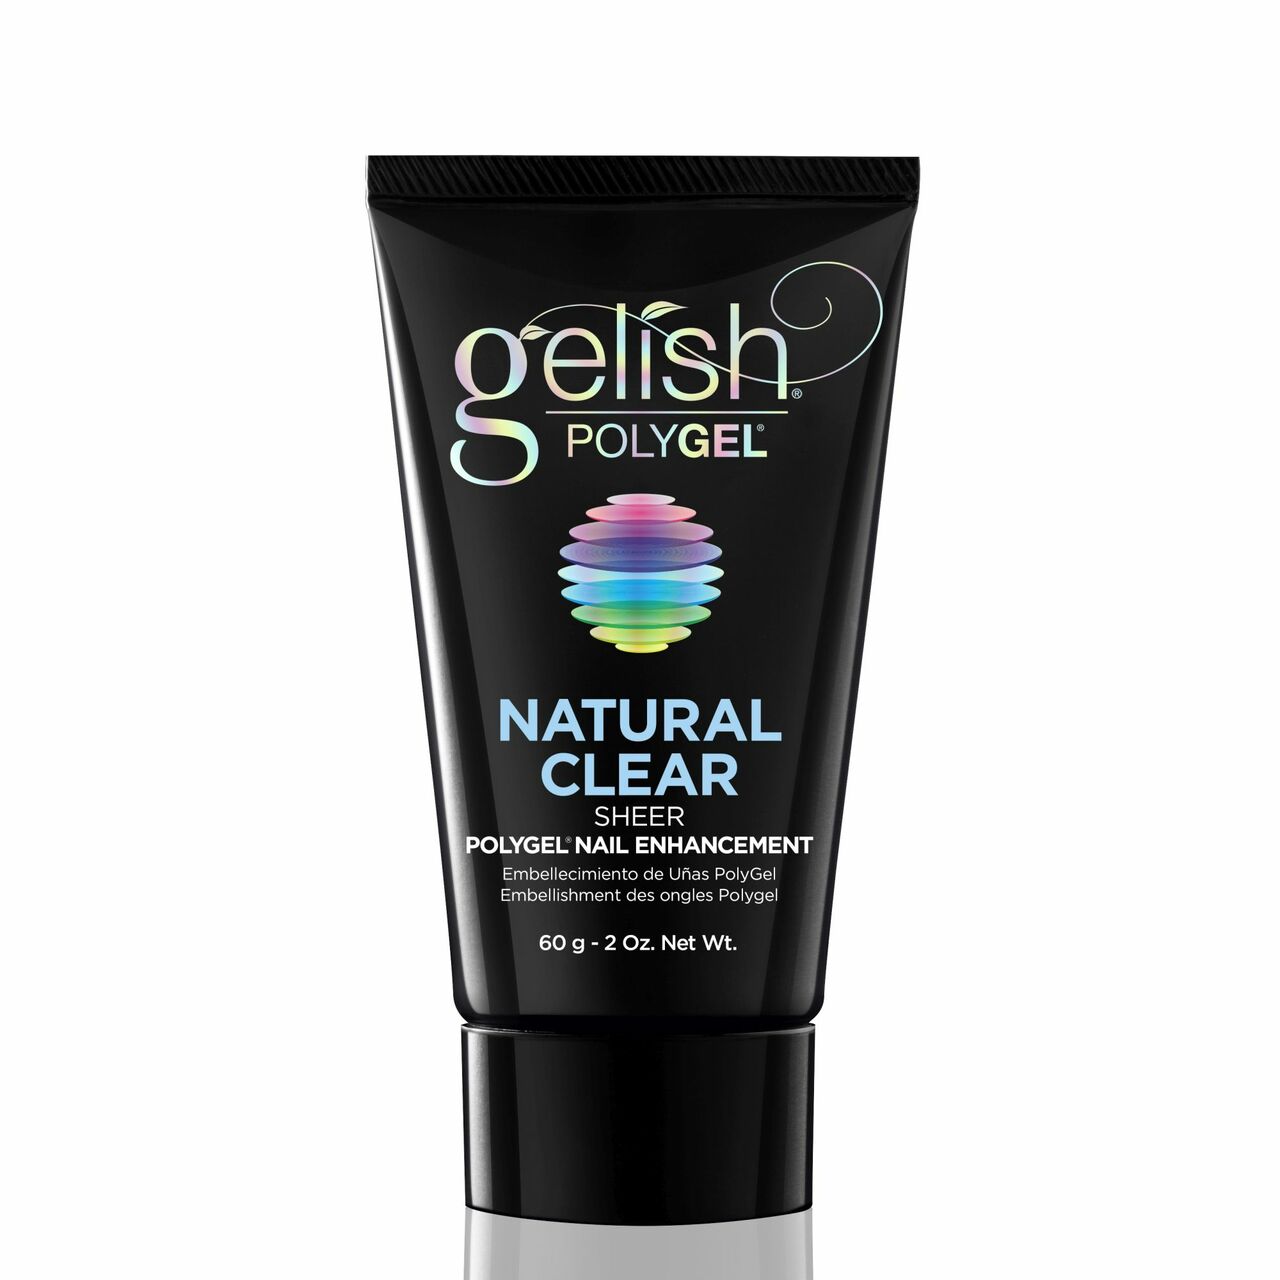 Gelish Polygel - Natural Clear 2 oz